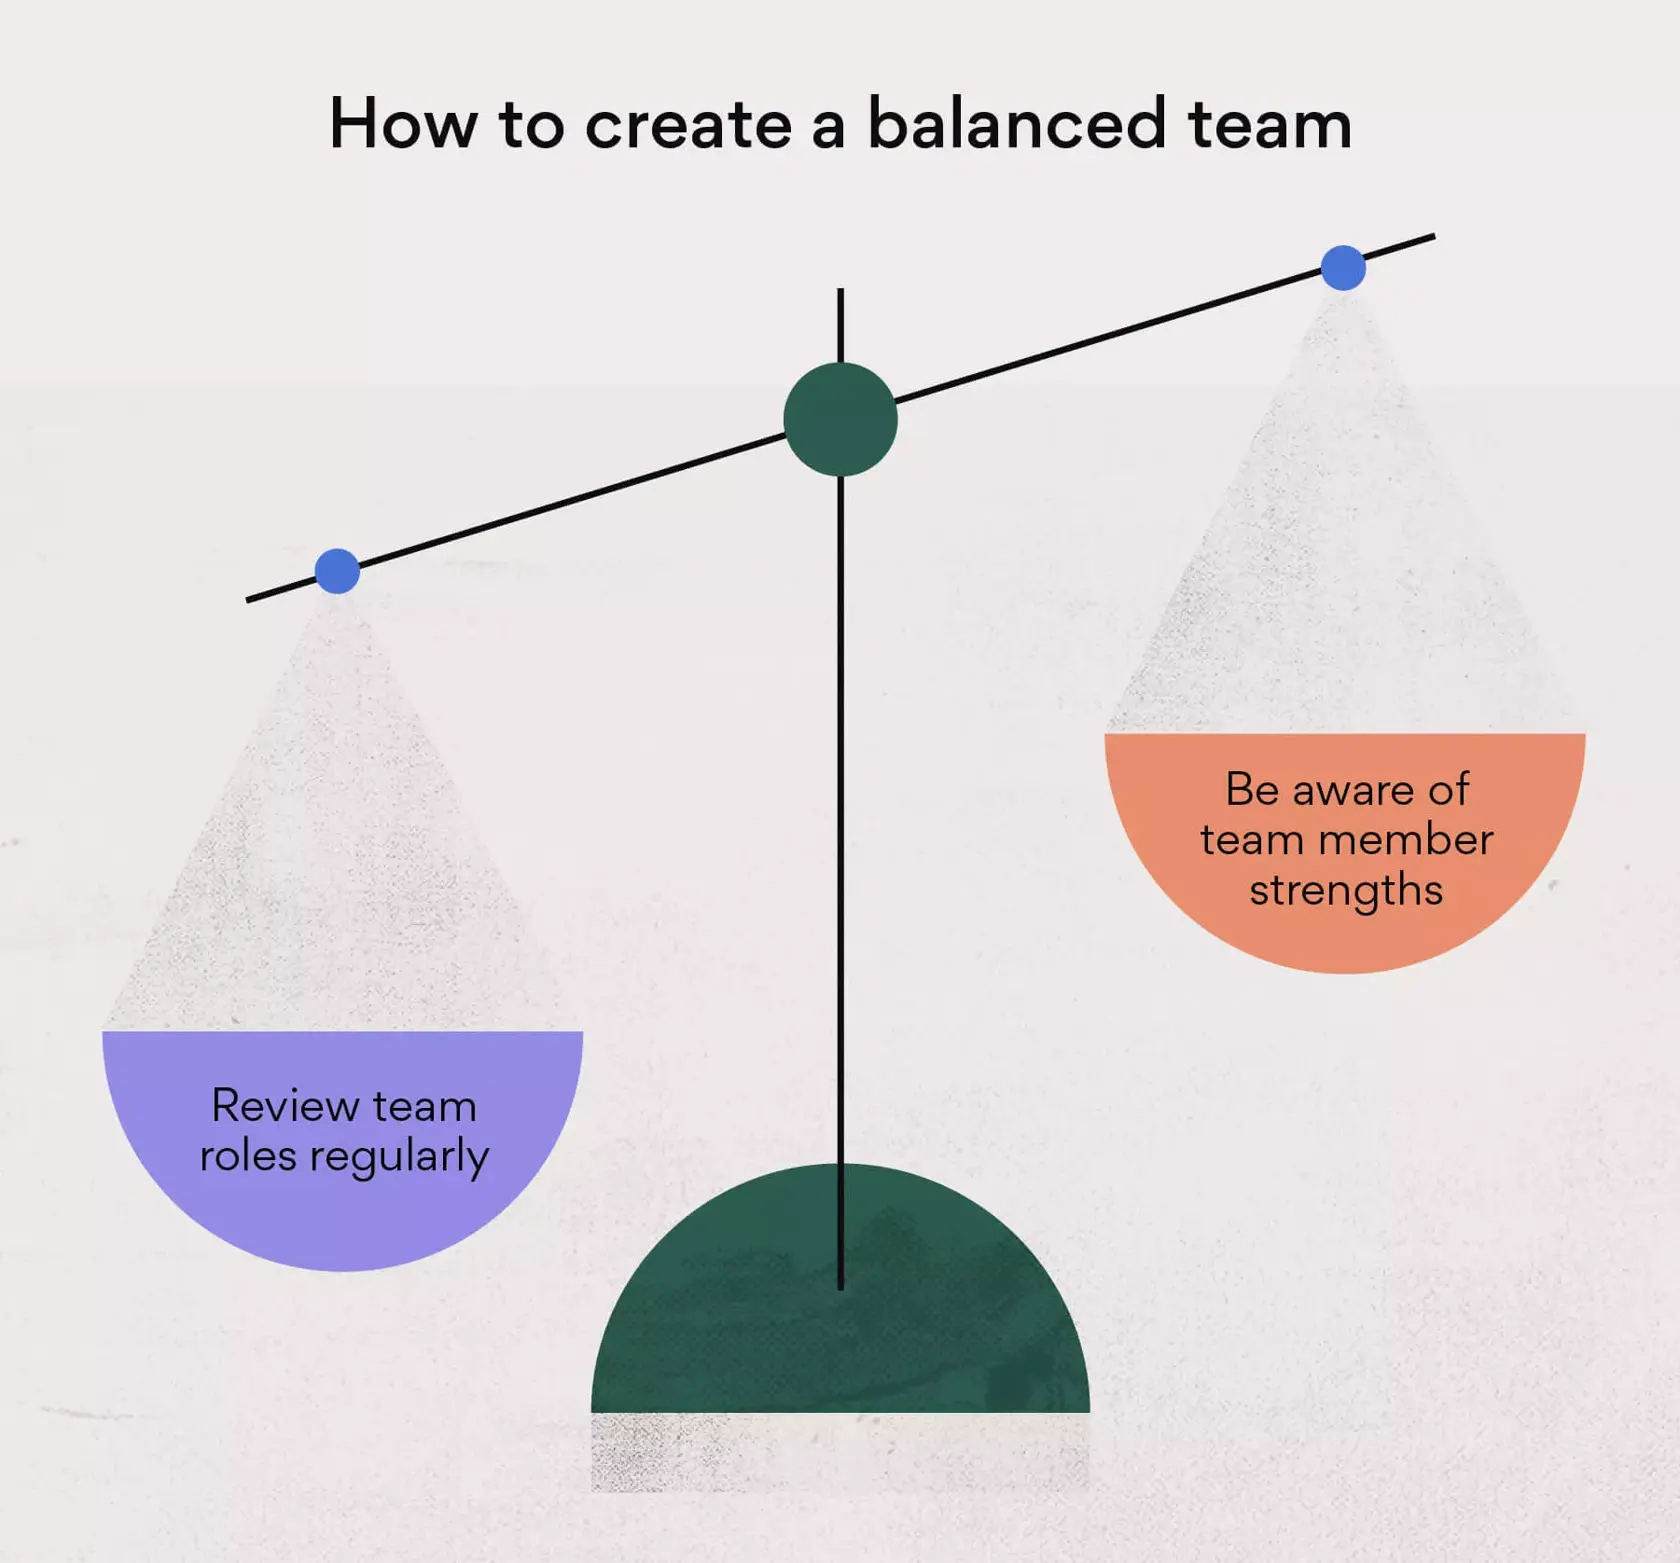 How to create a balanced team